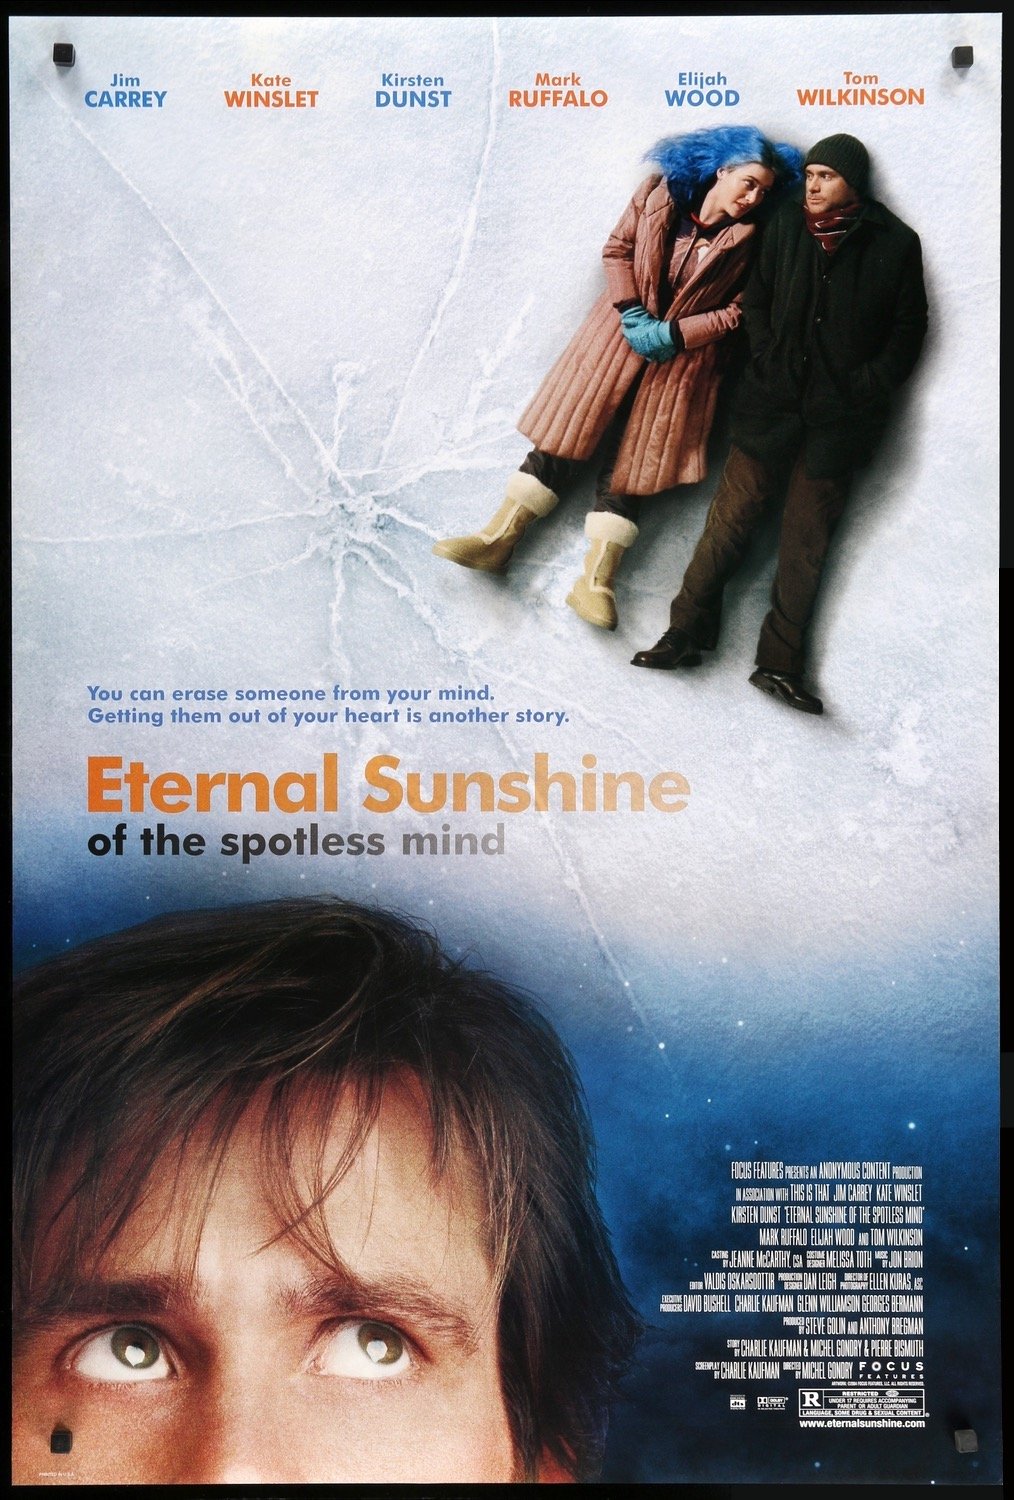 Eternal Sunshine of the Spotless Mind (2004) original movie poster for sale at Original Film Art